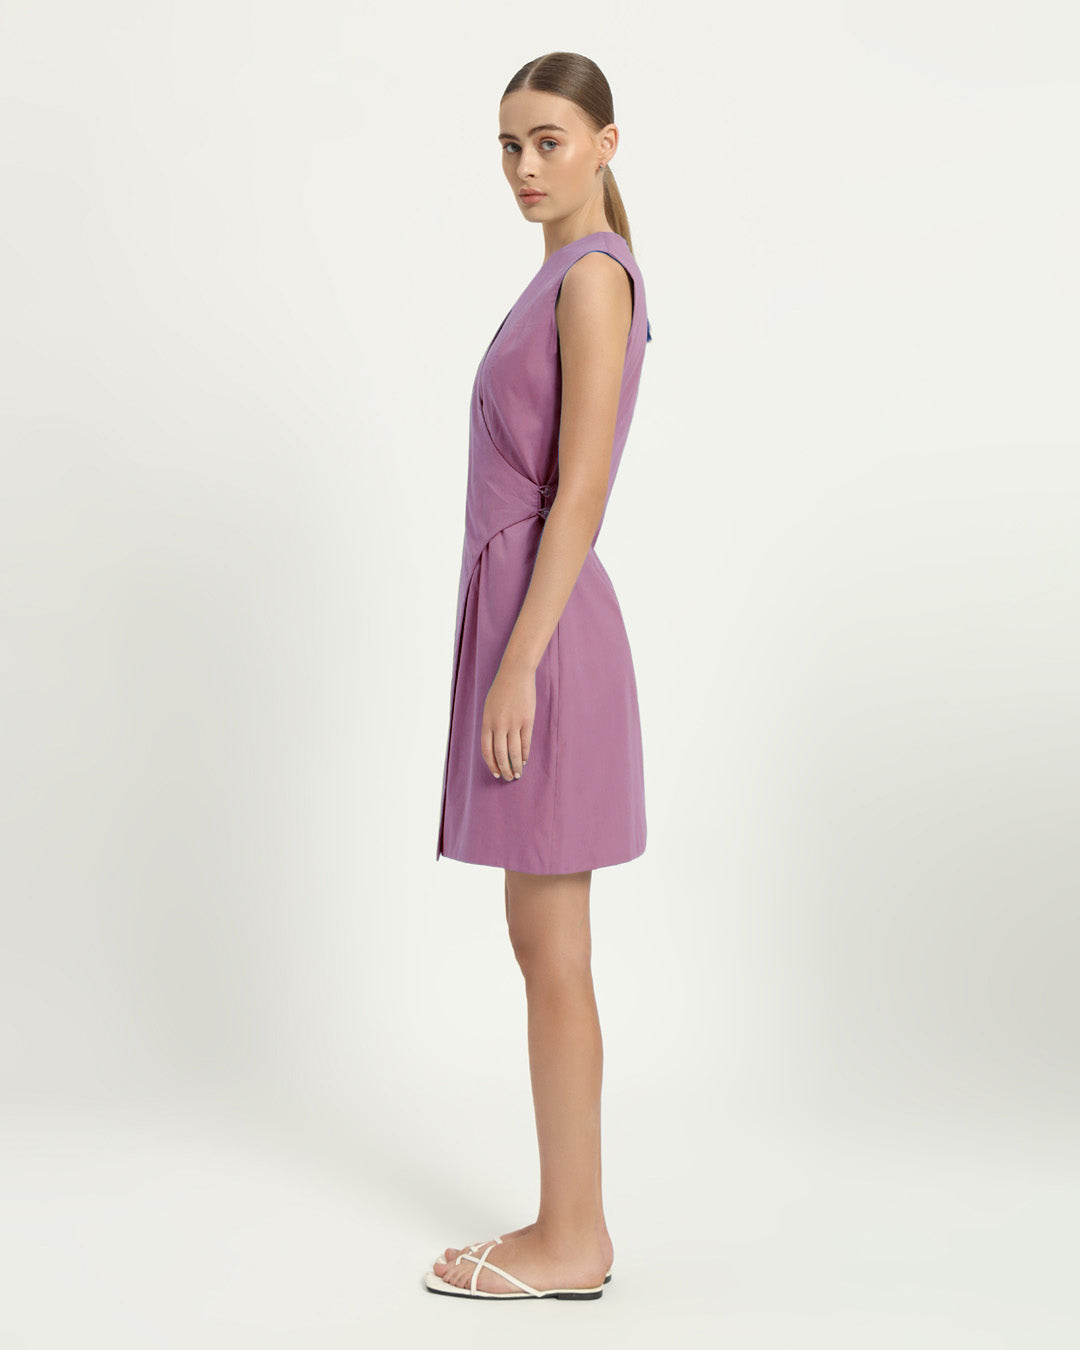 The Augsberg Purple Swirl Cotton Dress